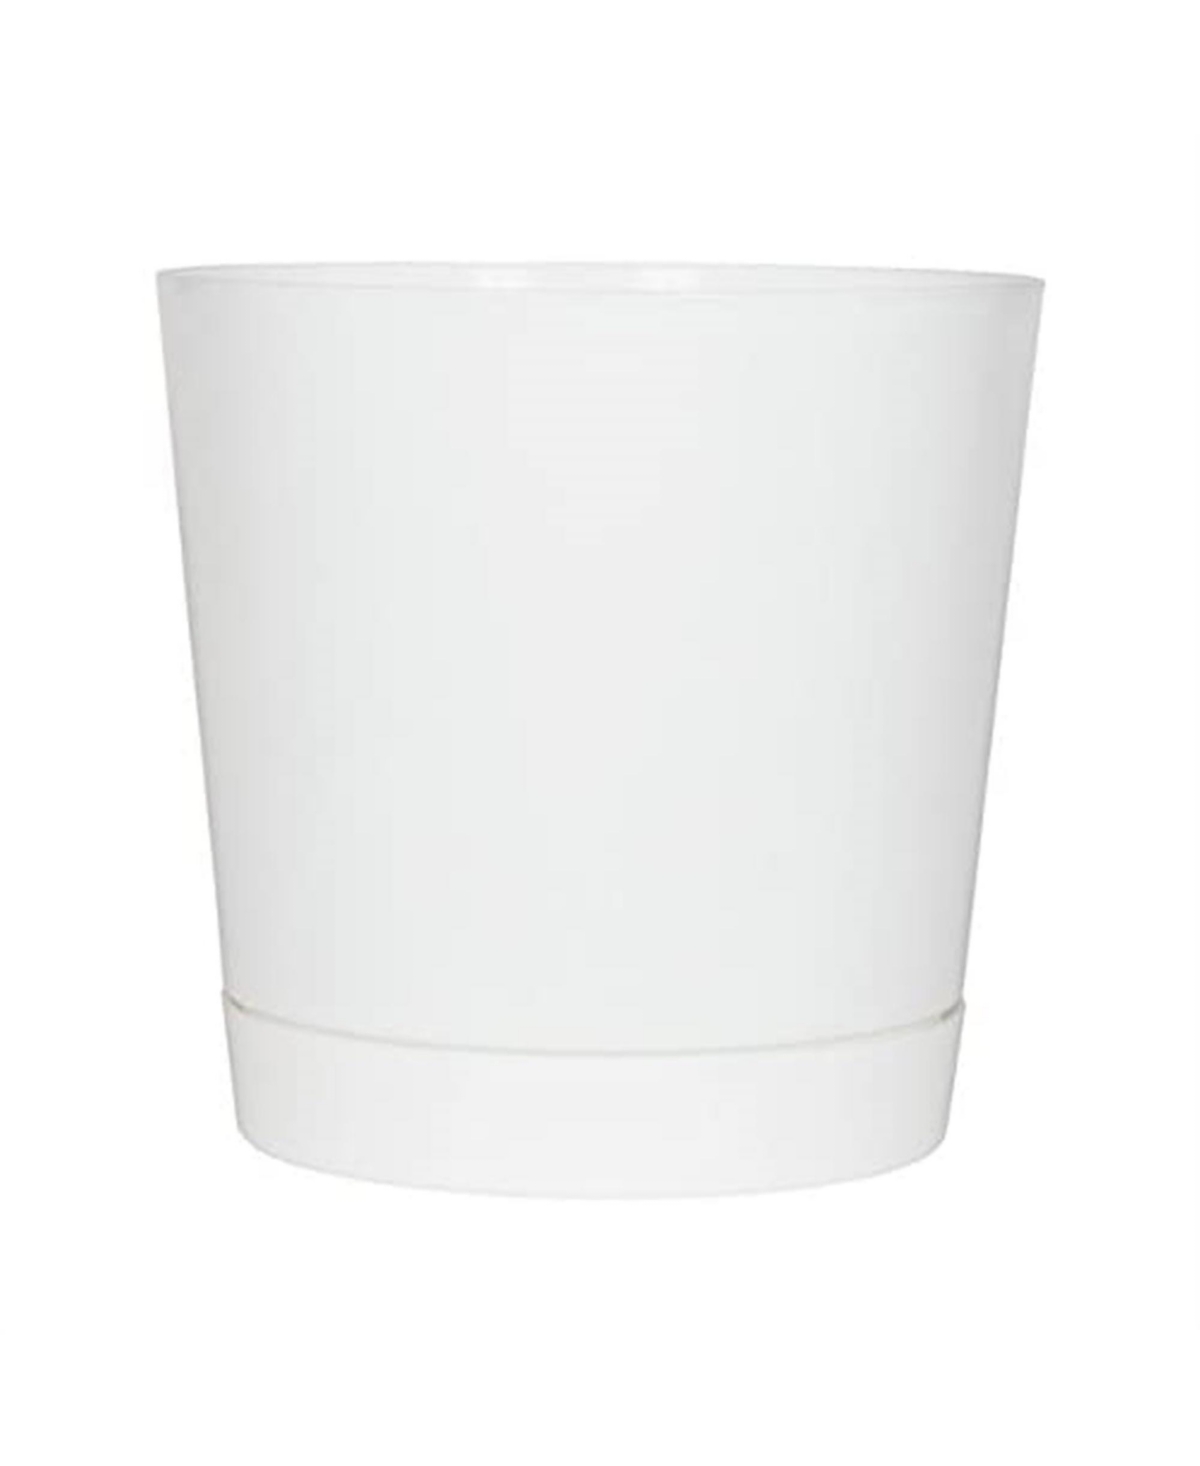 (#10142) Full Depth Cylinder Pot, White, 14 Inch - White